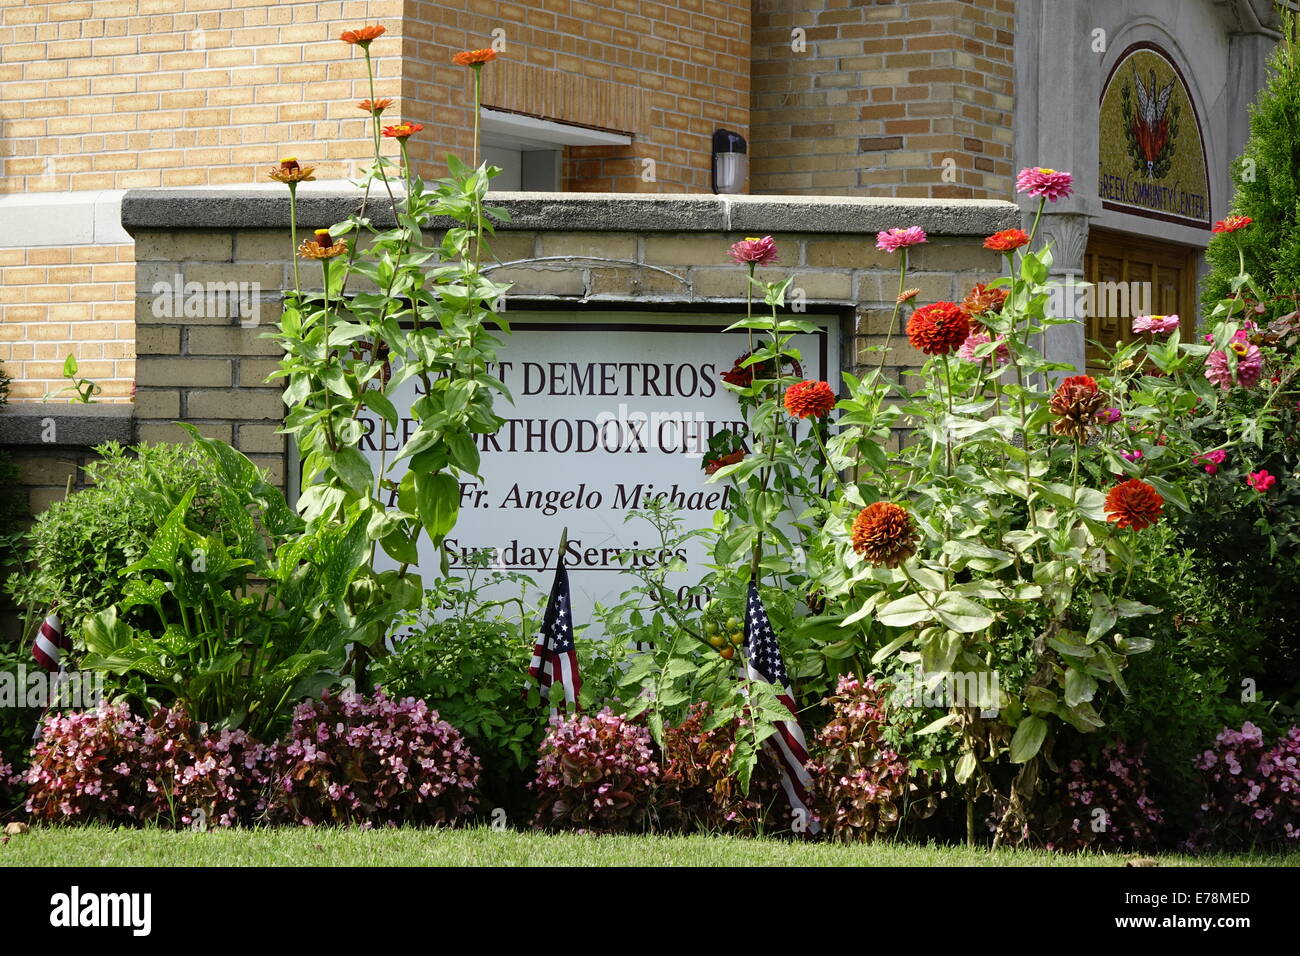 Garden of Saint Demetrios Greek Orthodox Church, Perth Amboy, New Jersey Stock Photo